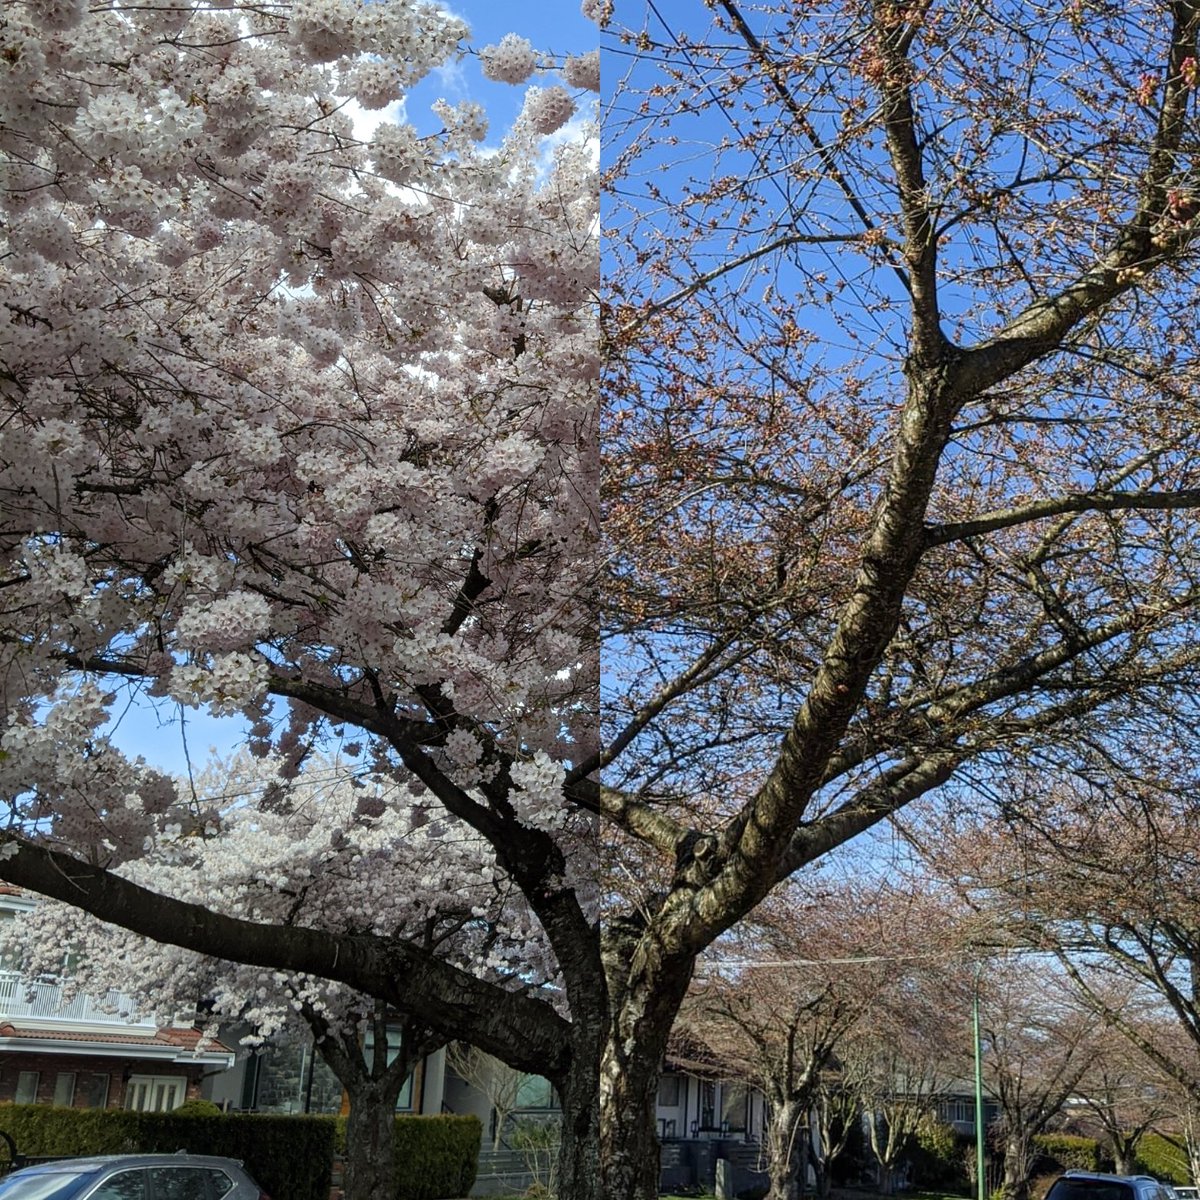 March 18 vs April 11. #CherryBlossoms  #CherryBlossomDaily  #CherryBlossom  #Burnaby  #Metrotown  #Vancouver  #BC  #BeautifulBC